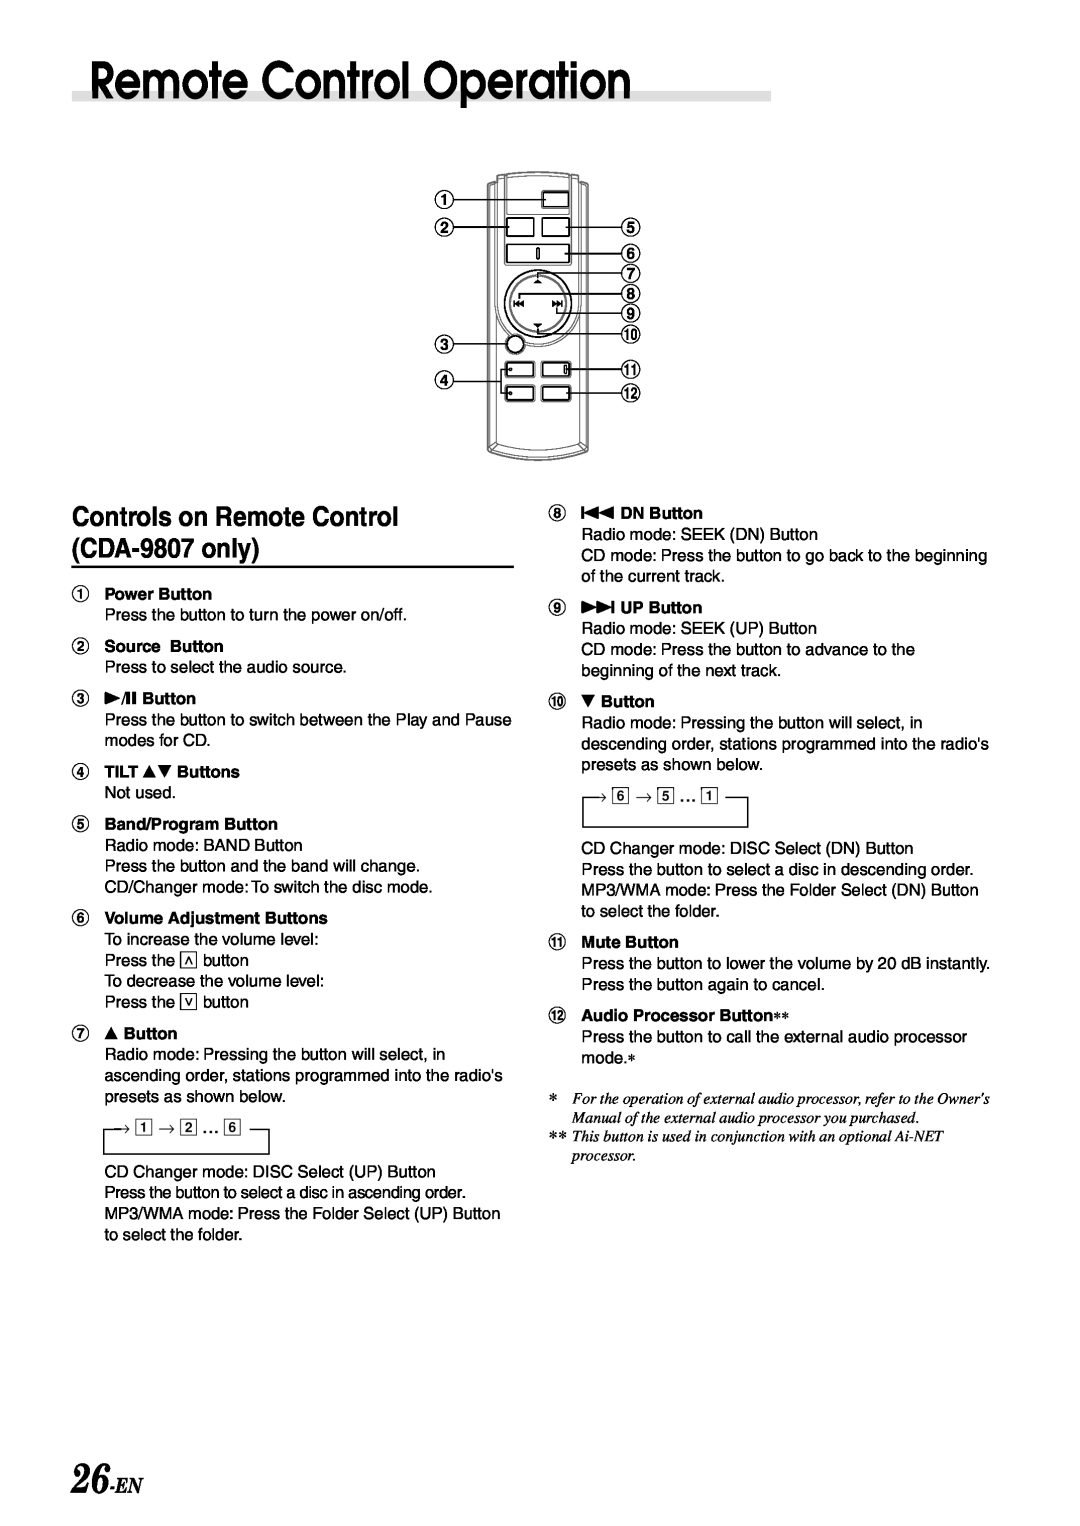 Alpine cda-9805 owner manual Remote Control Operation, Controls on Remote Control CDA-9807only, 26-EN 